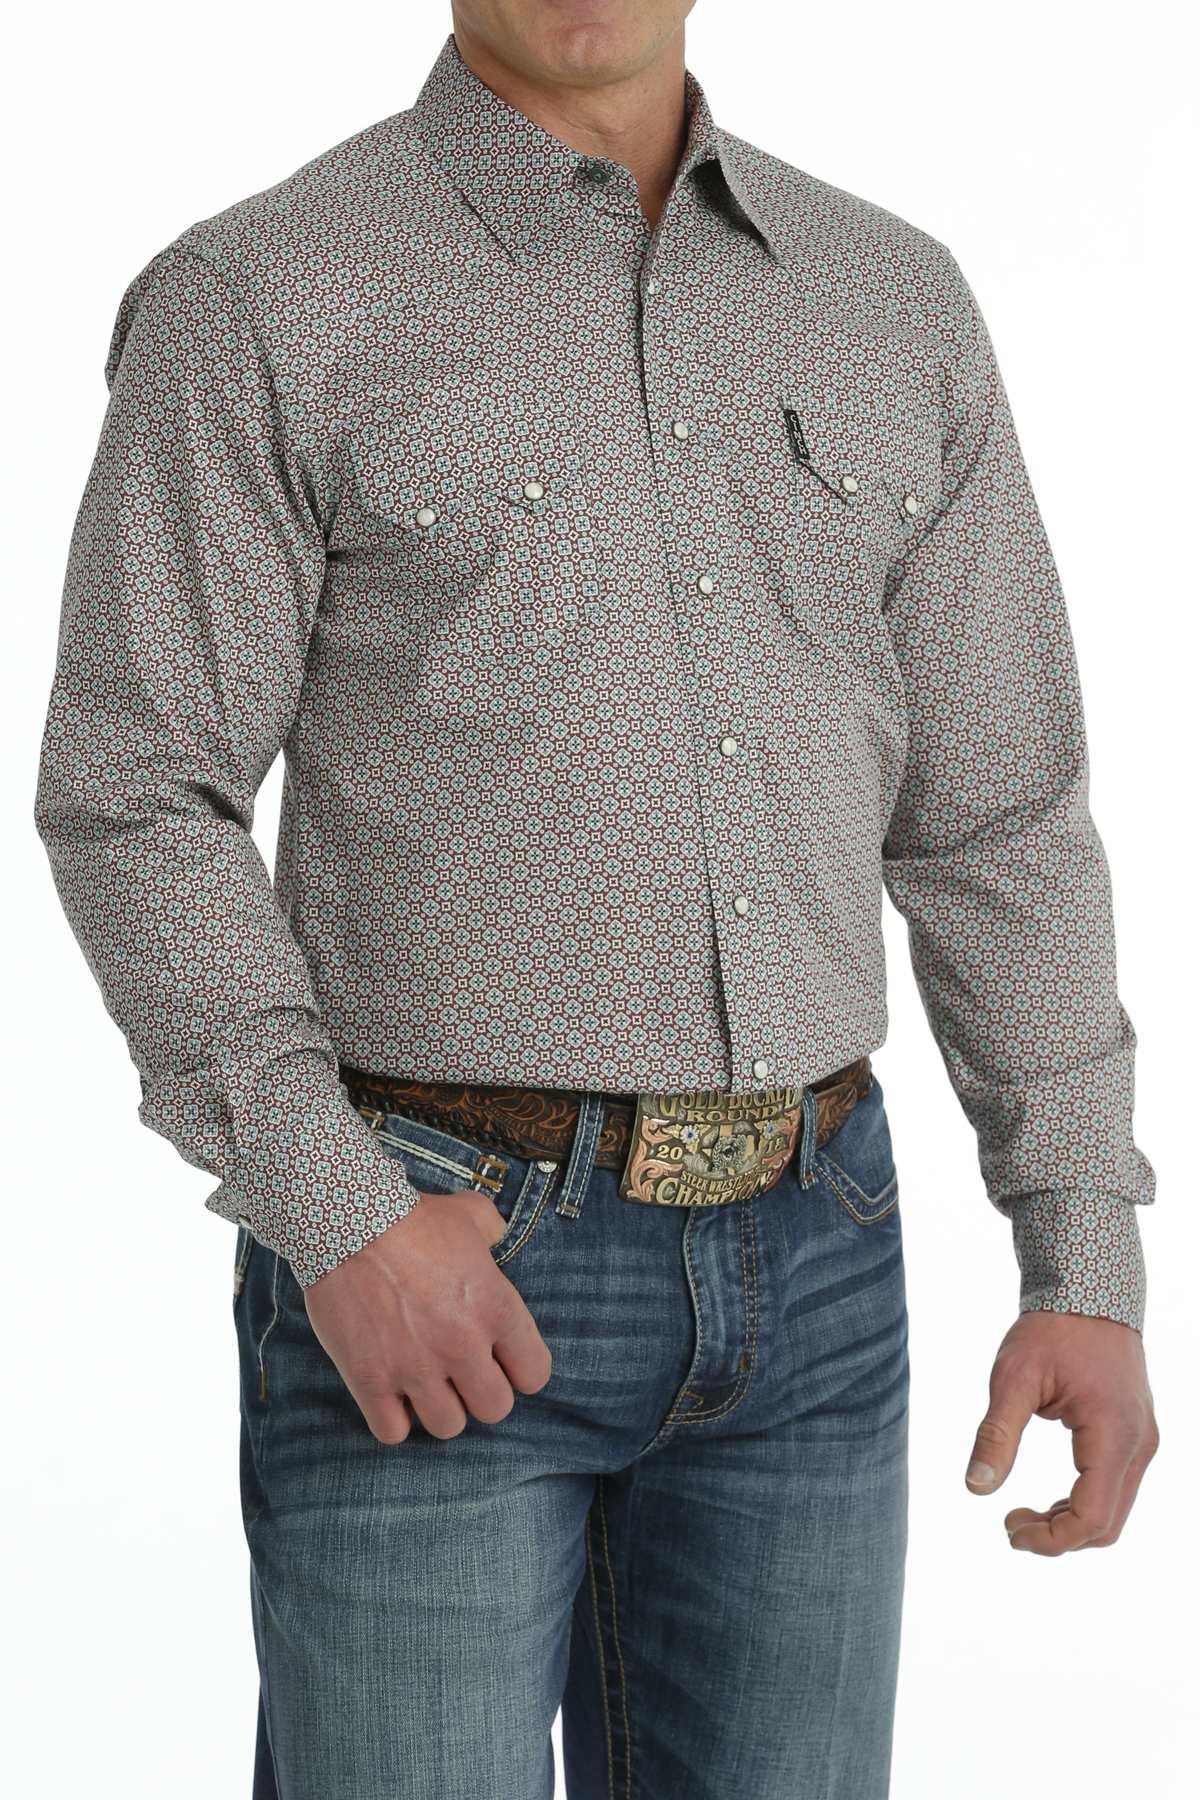 chemise-equitation-western-homme-cinch-gris-2